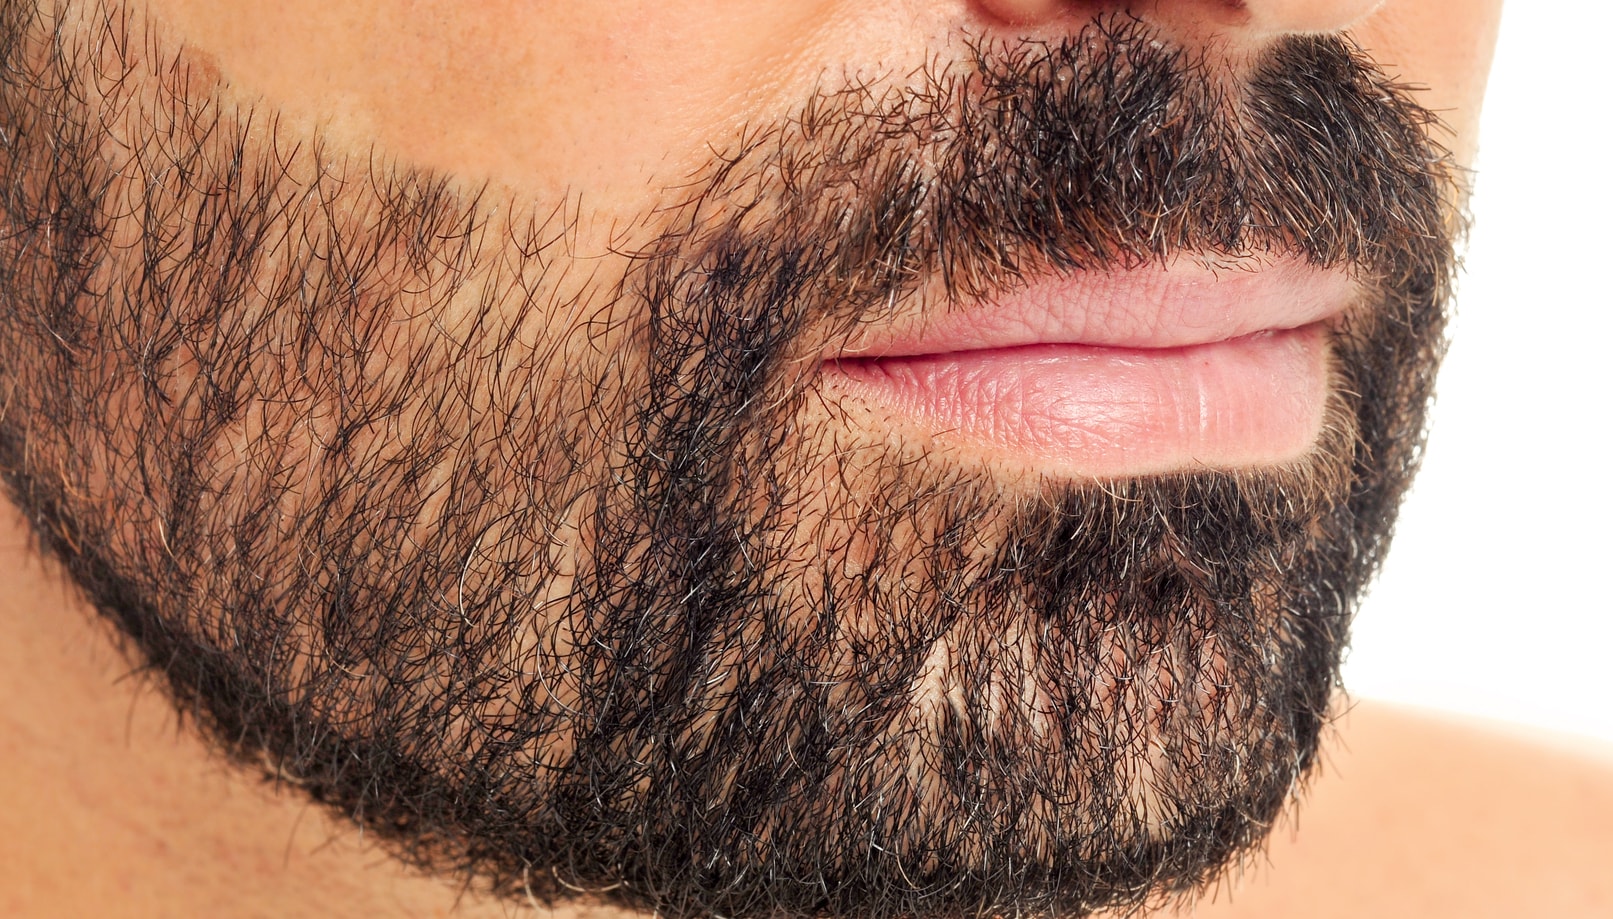 Beard/ Eyebrow/Eyelid Transplant – Fugamed